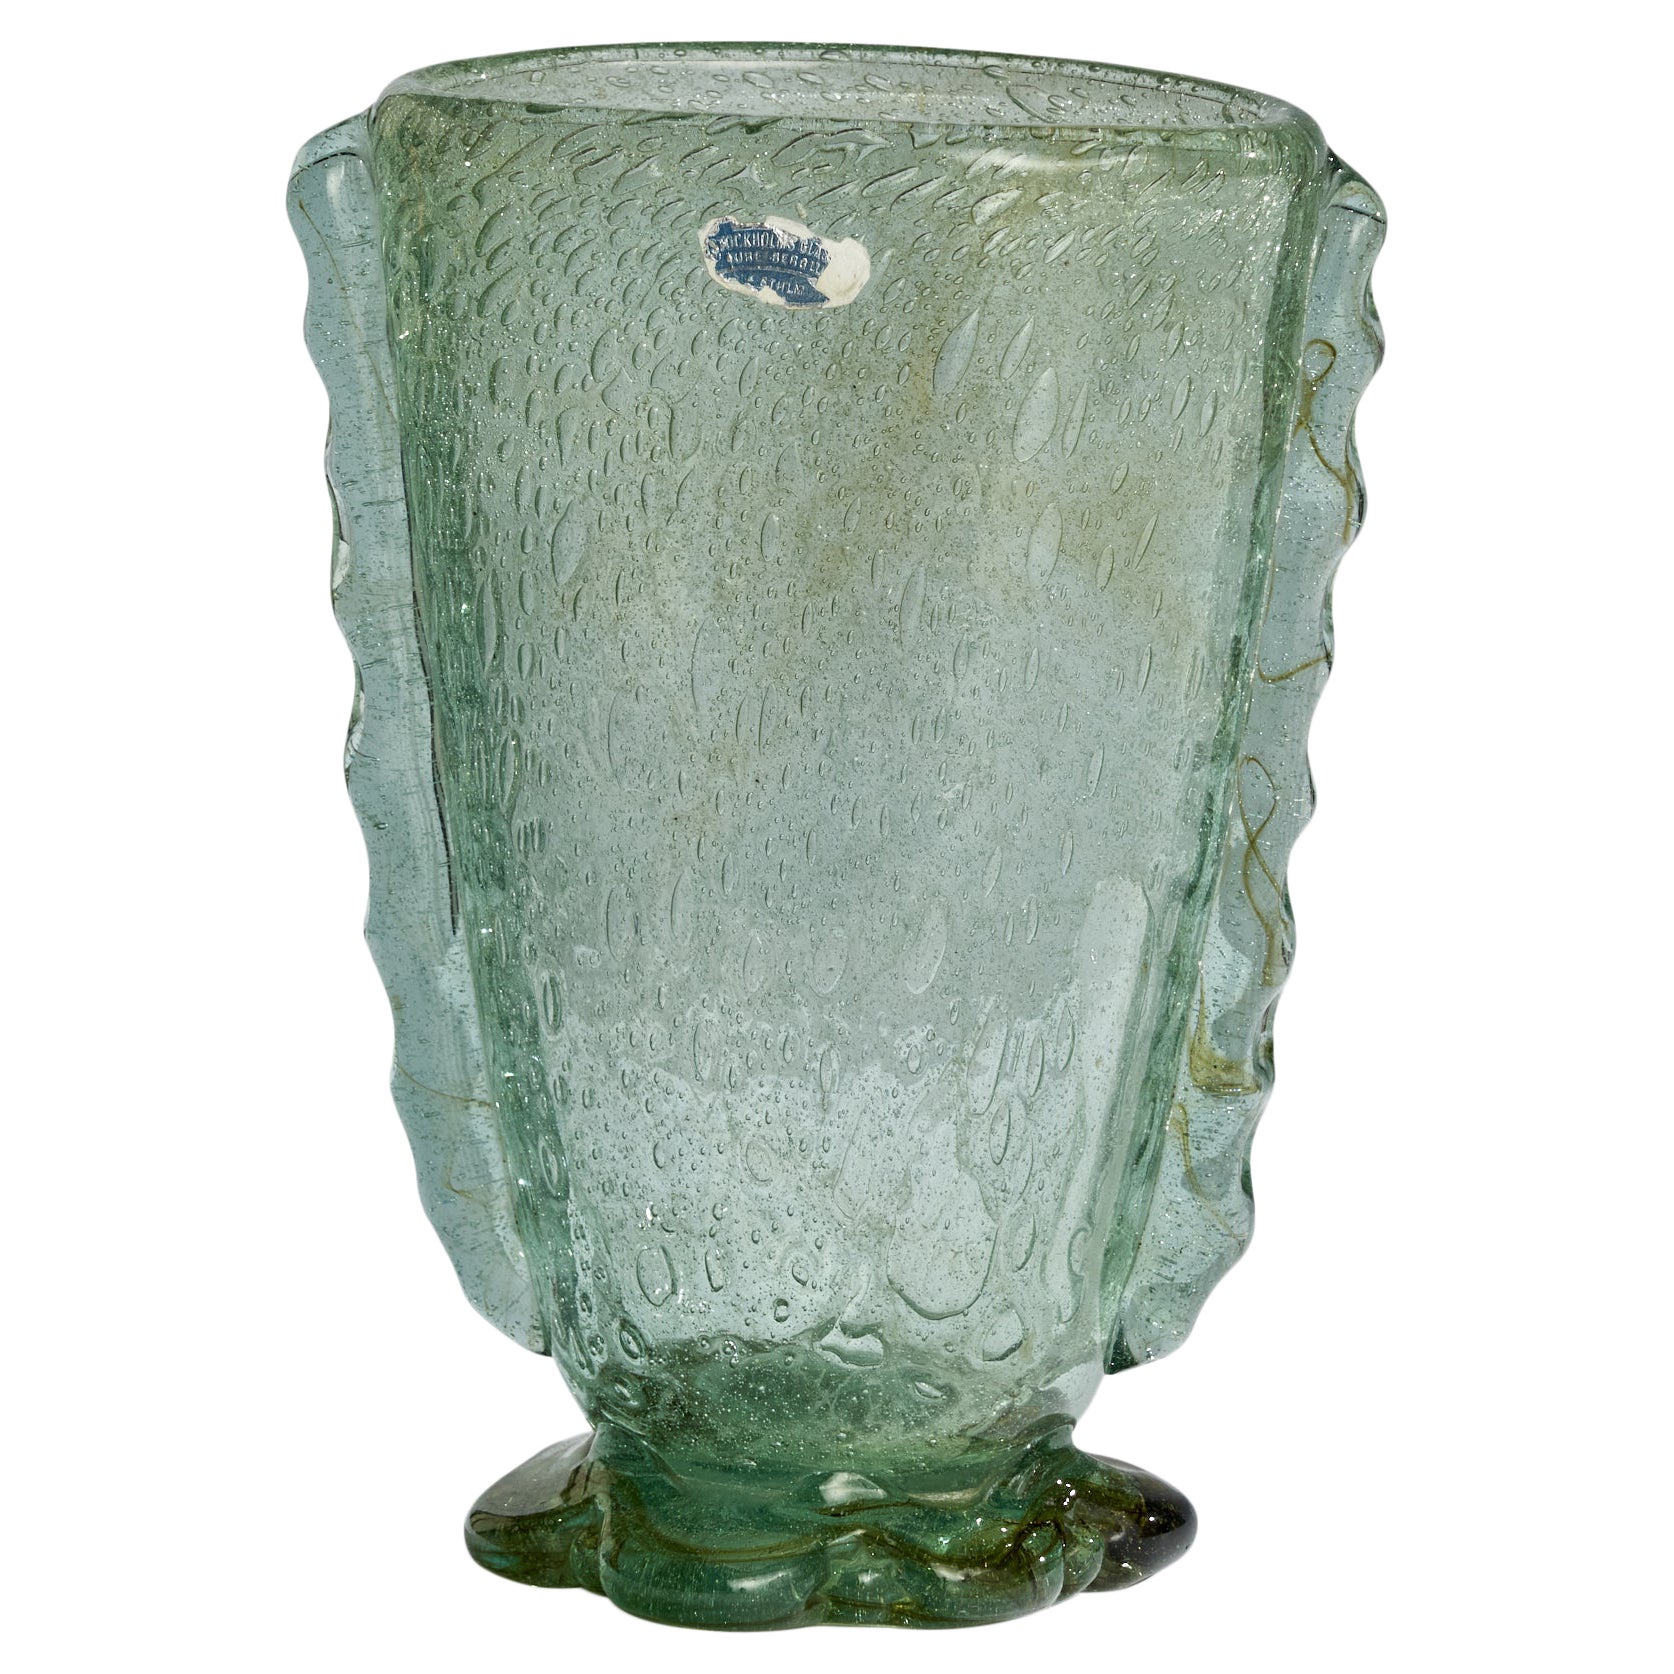 Ture Berglund, Vase, Glass, Sweden, 1940s